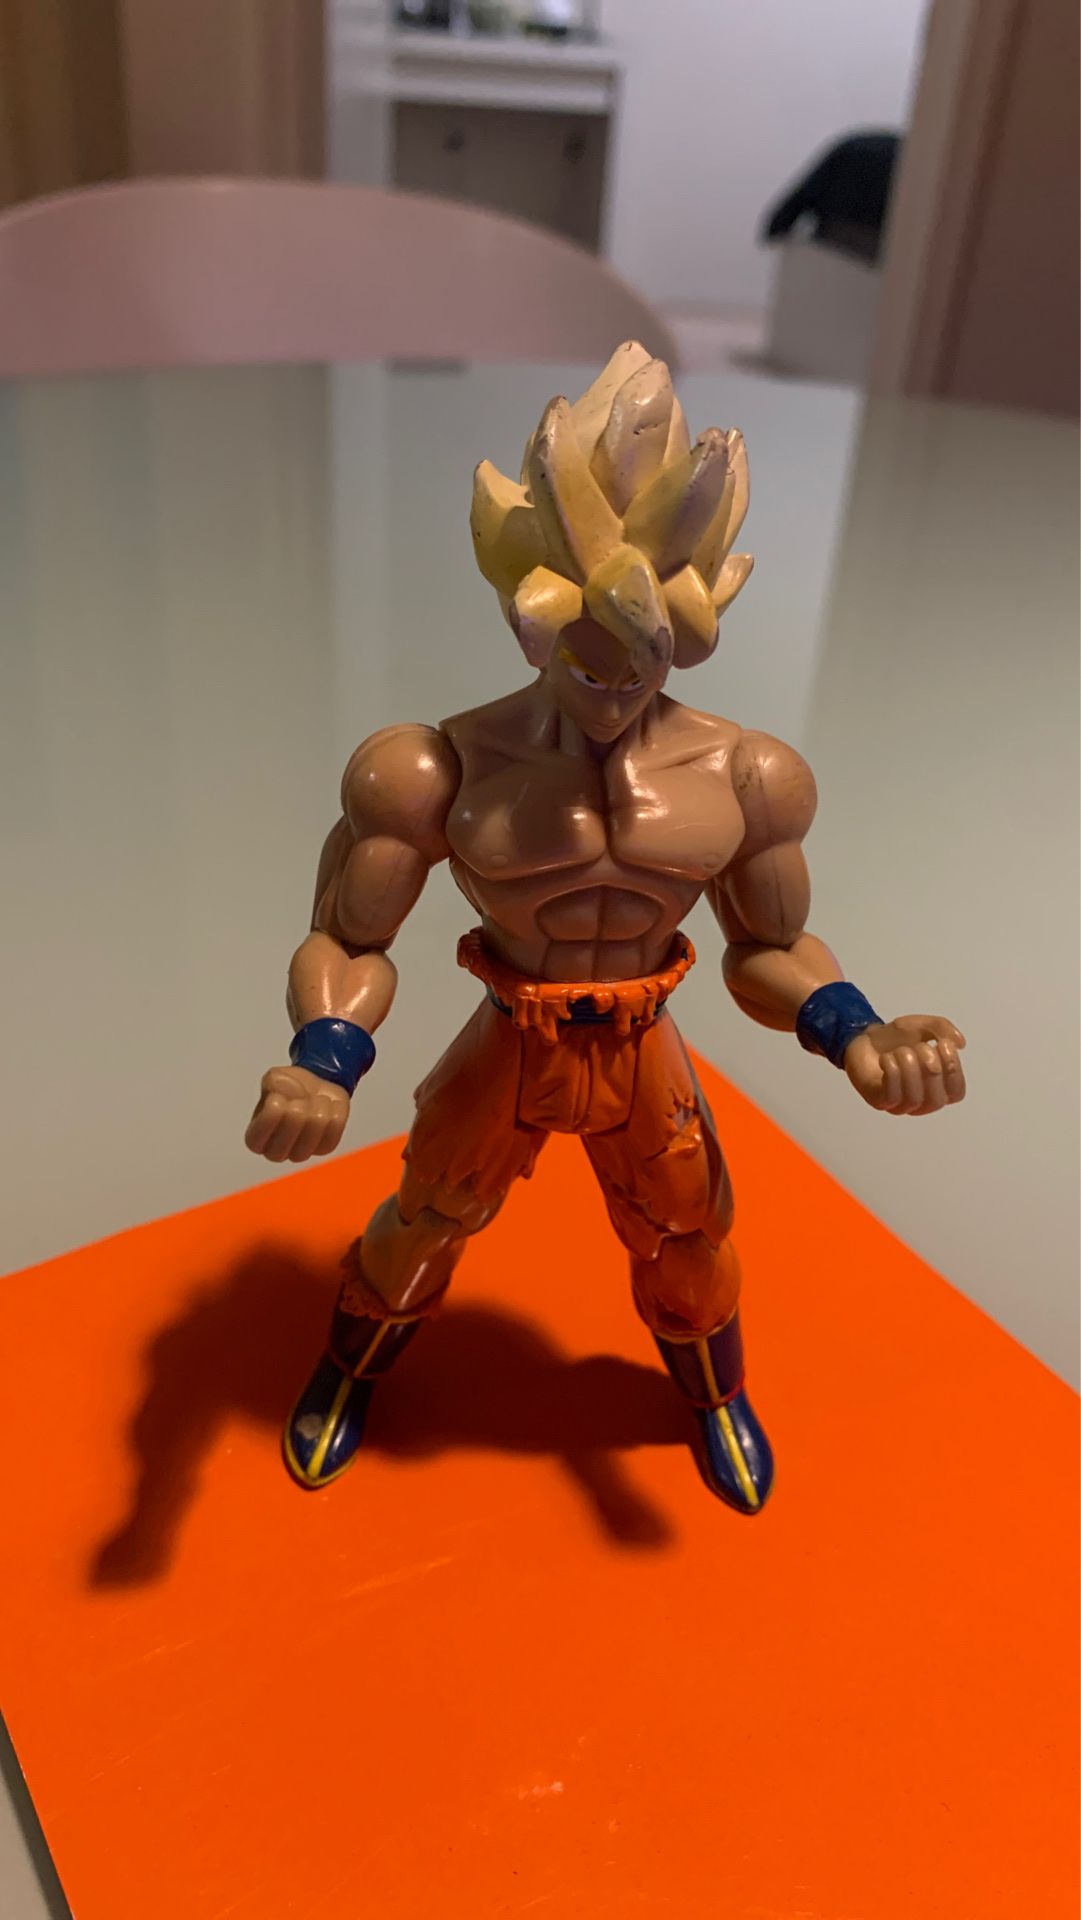 Súper sayian Goku action figure